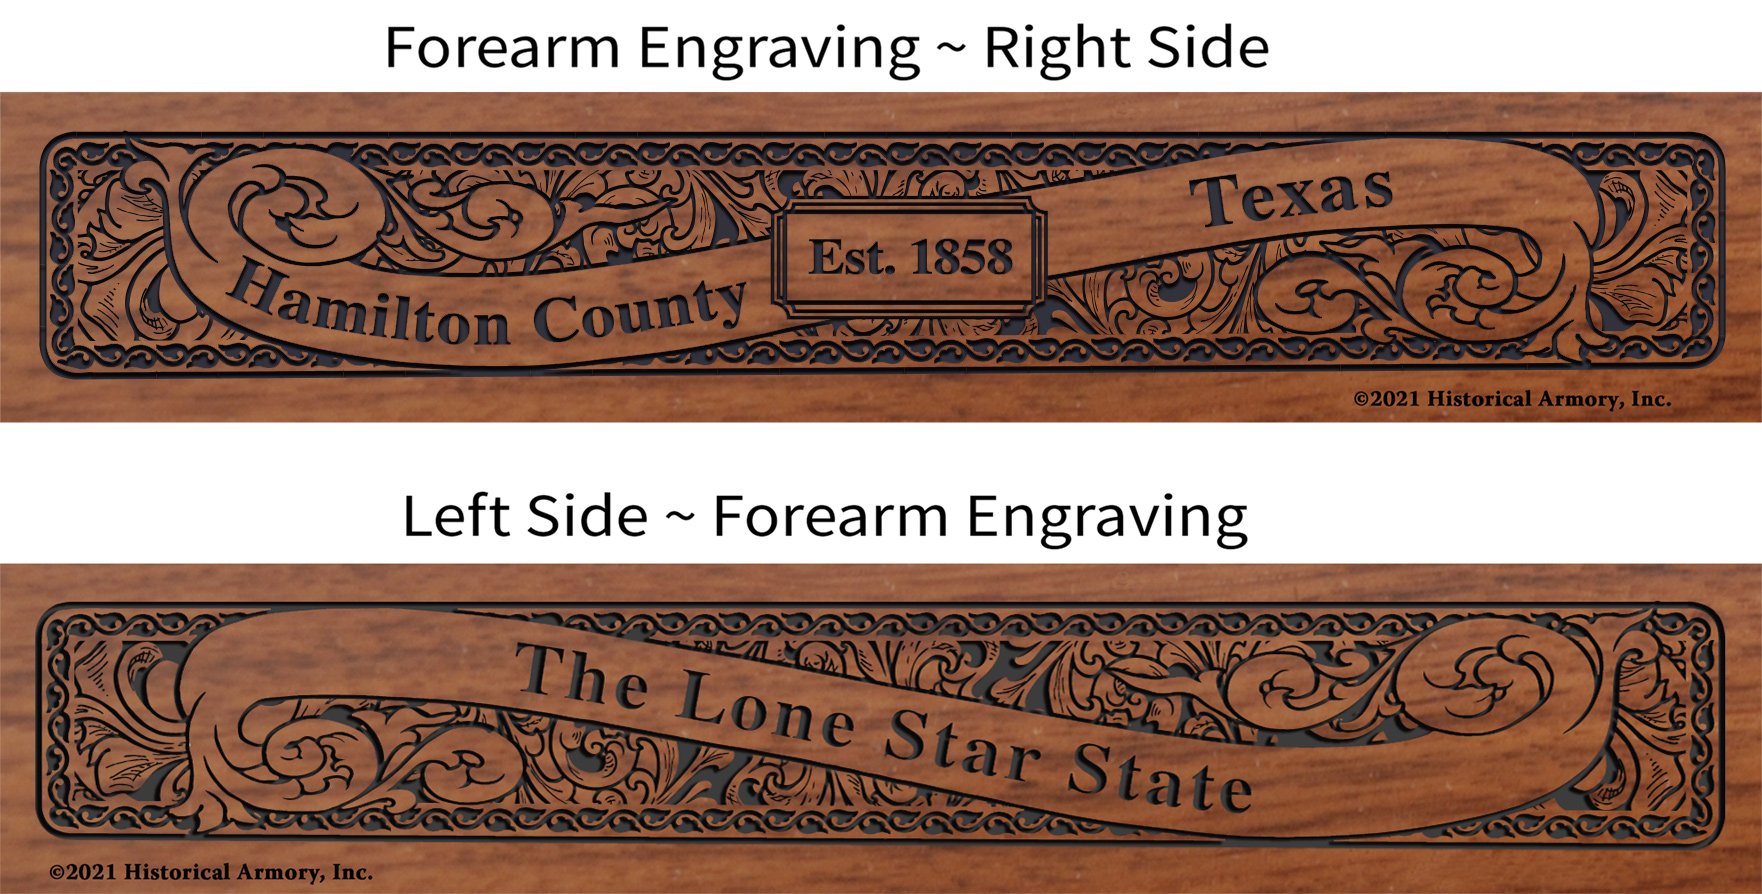 Hamilton County Texas Establishment and Motto History Engraved Rifle Forearm